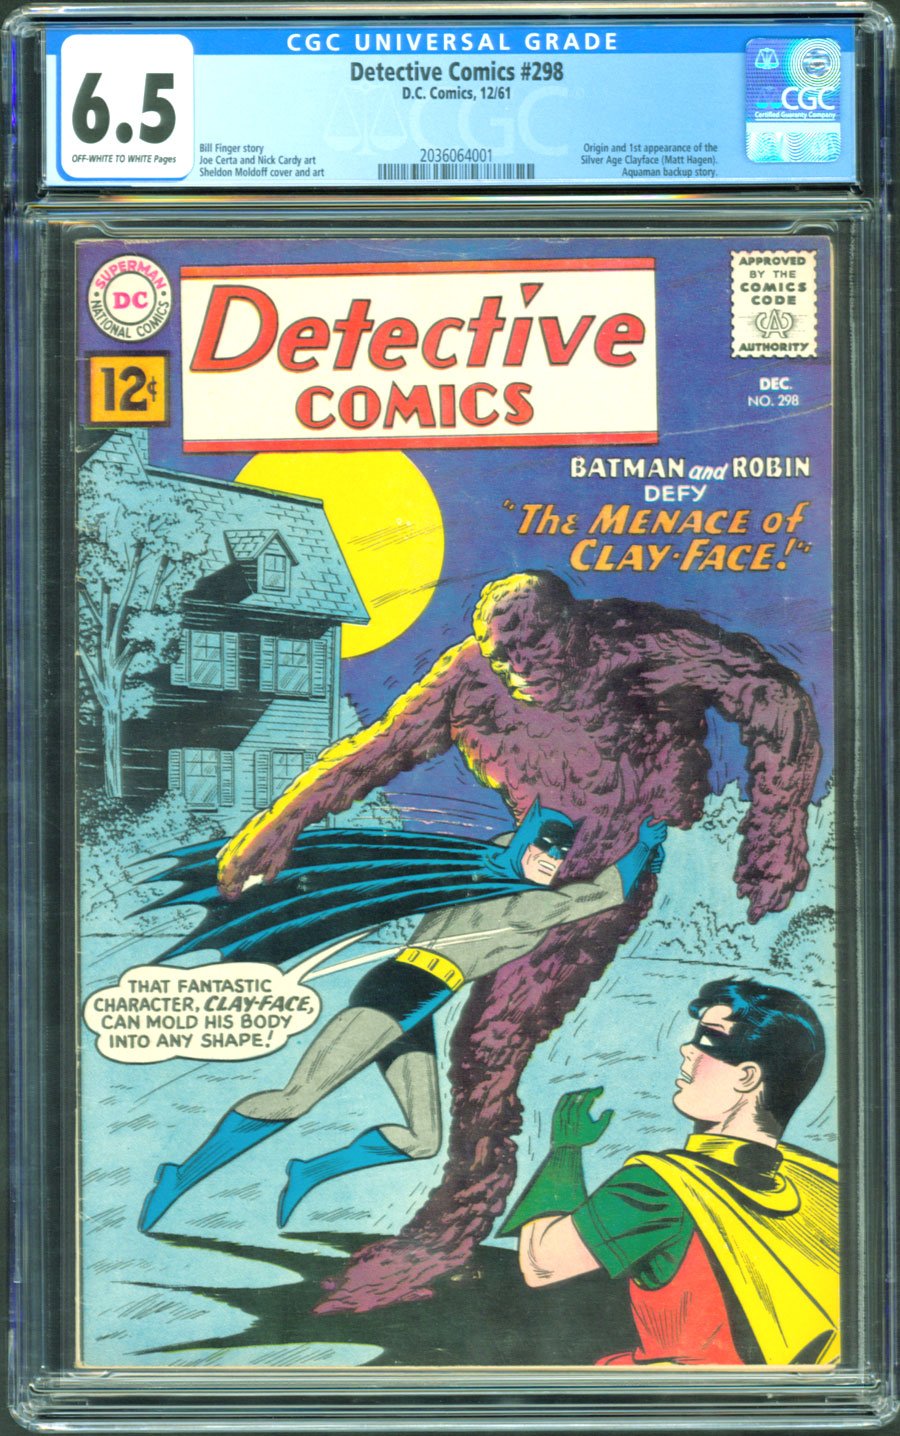 ComicConnect - DETECTIVE COMICS (1937-2011; 2016-) #298 - CGC FN+: 6.5